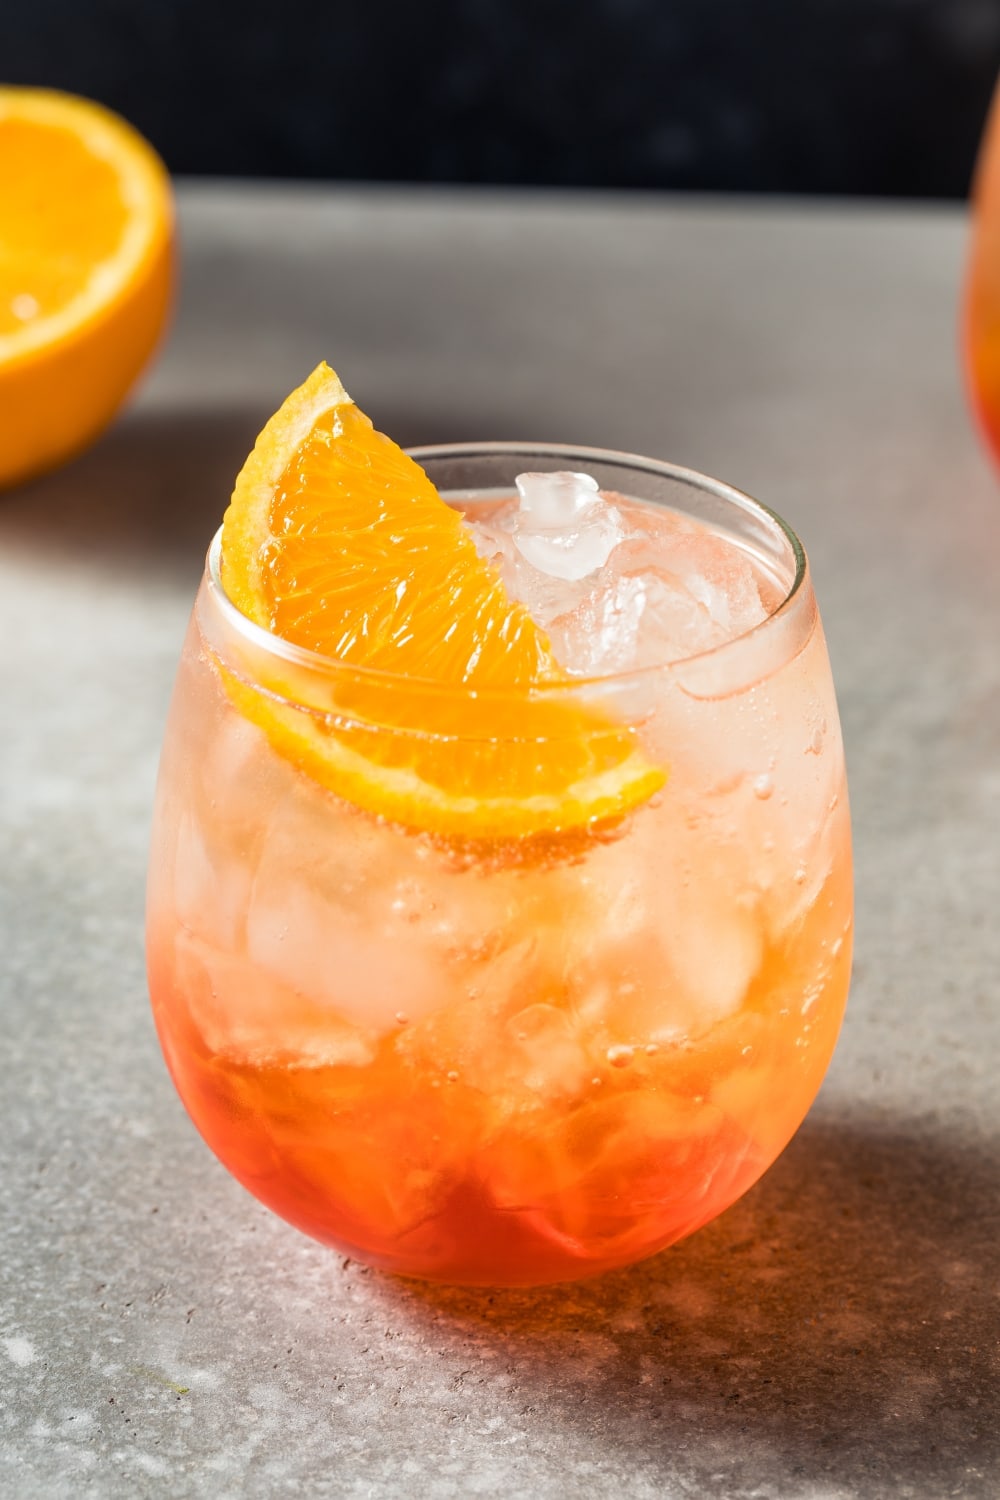 Glass of Refreshing Boozy Aperol Spritz Garnished With a Slice of Orange